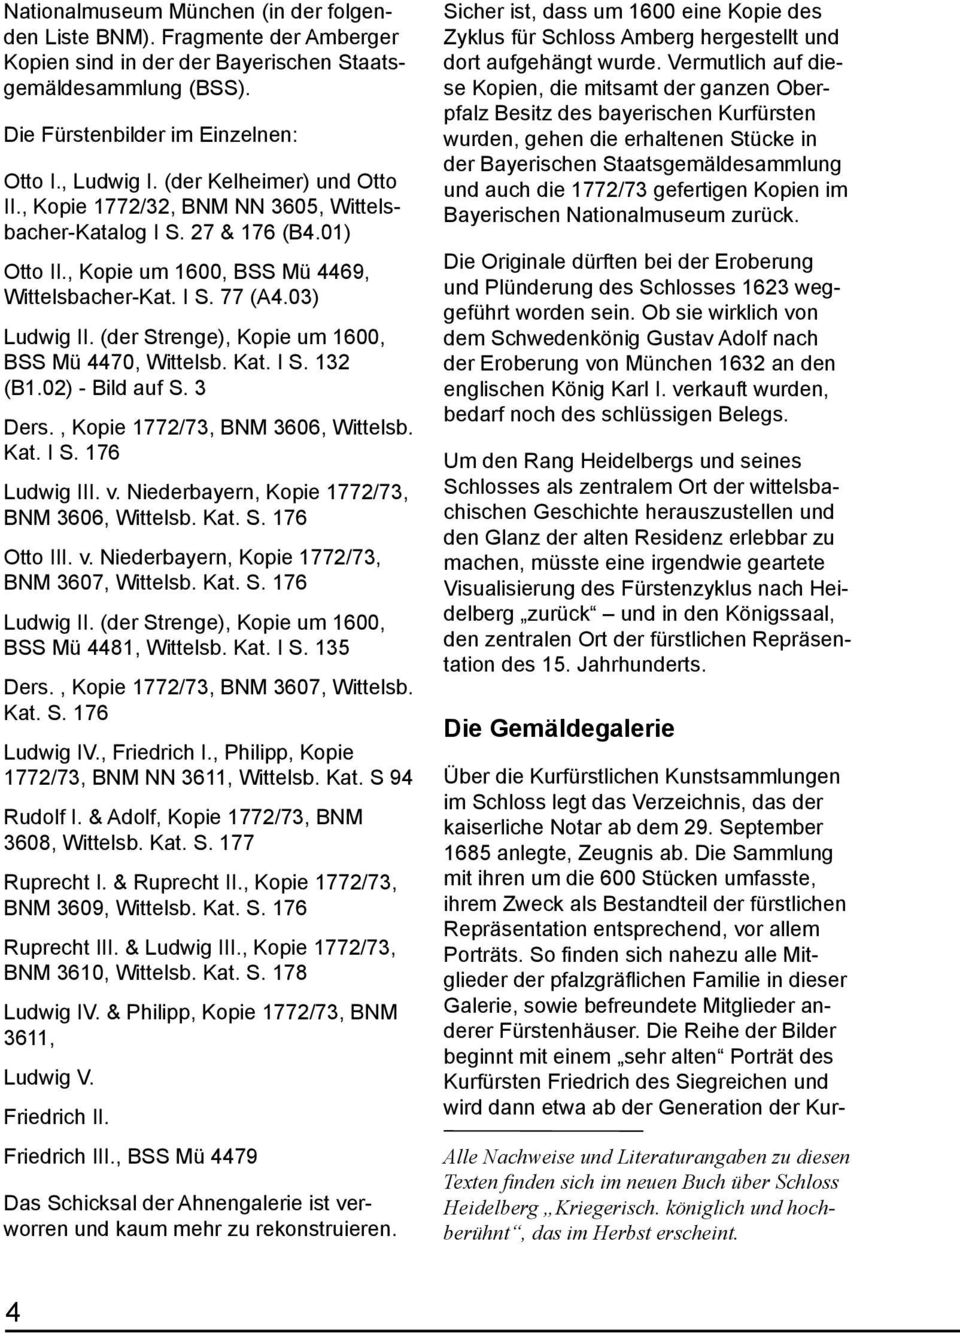 (der Strenge), Kopie um 1600, BSS Mü 4470, Wittelsb. Kat. I S. 132 (B1.02) - Bild auf S. 3 Ders., Kopie 1772/73, BNM 3606, Wittelsb. Kat. I S. 176 Ludwig III. v.